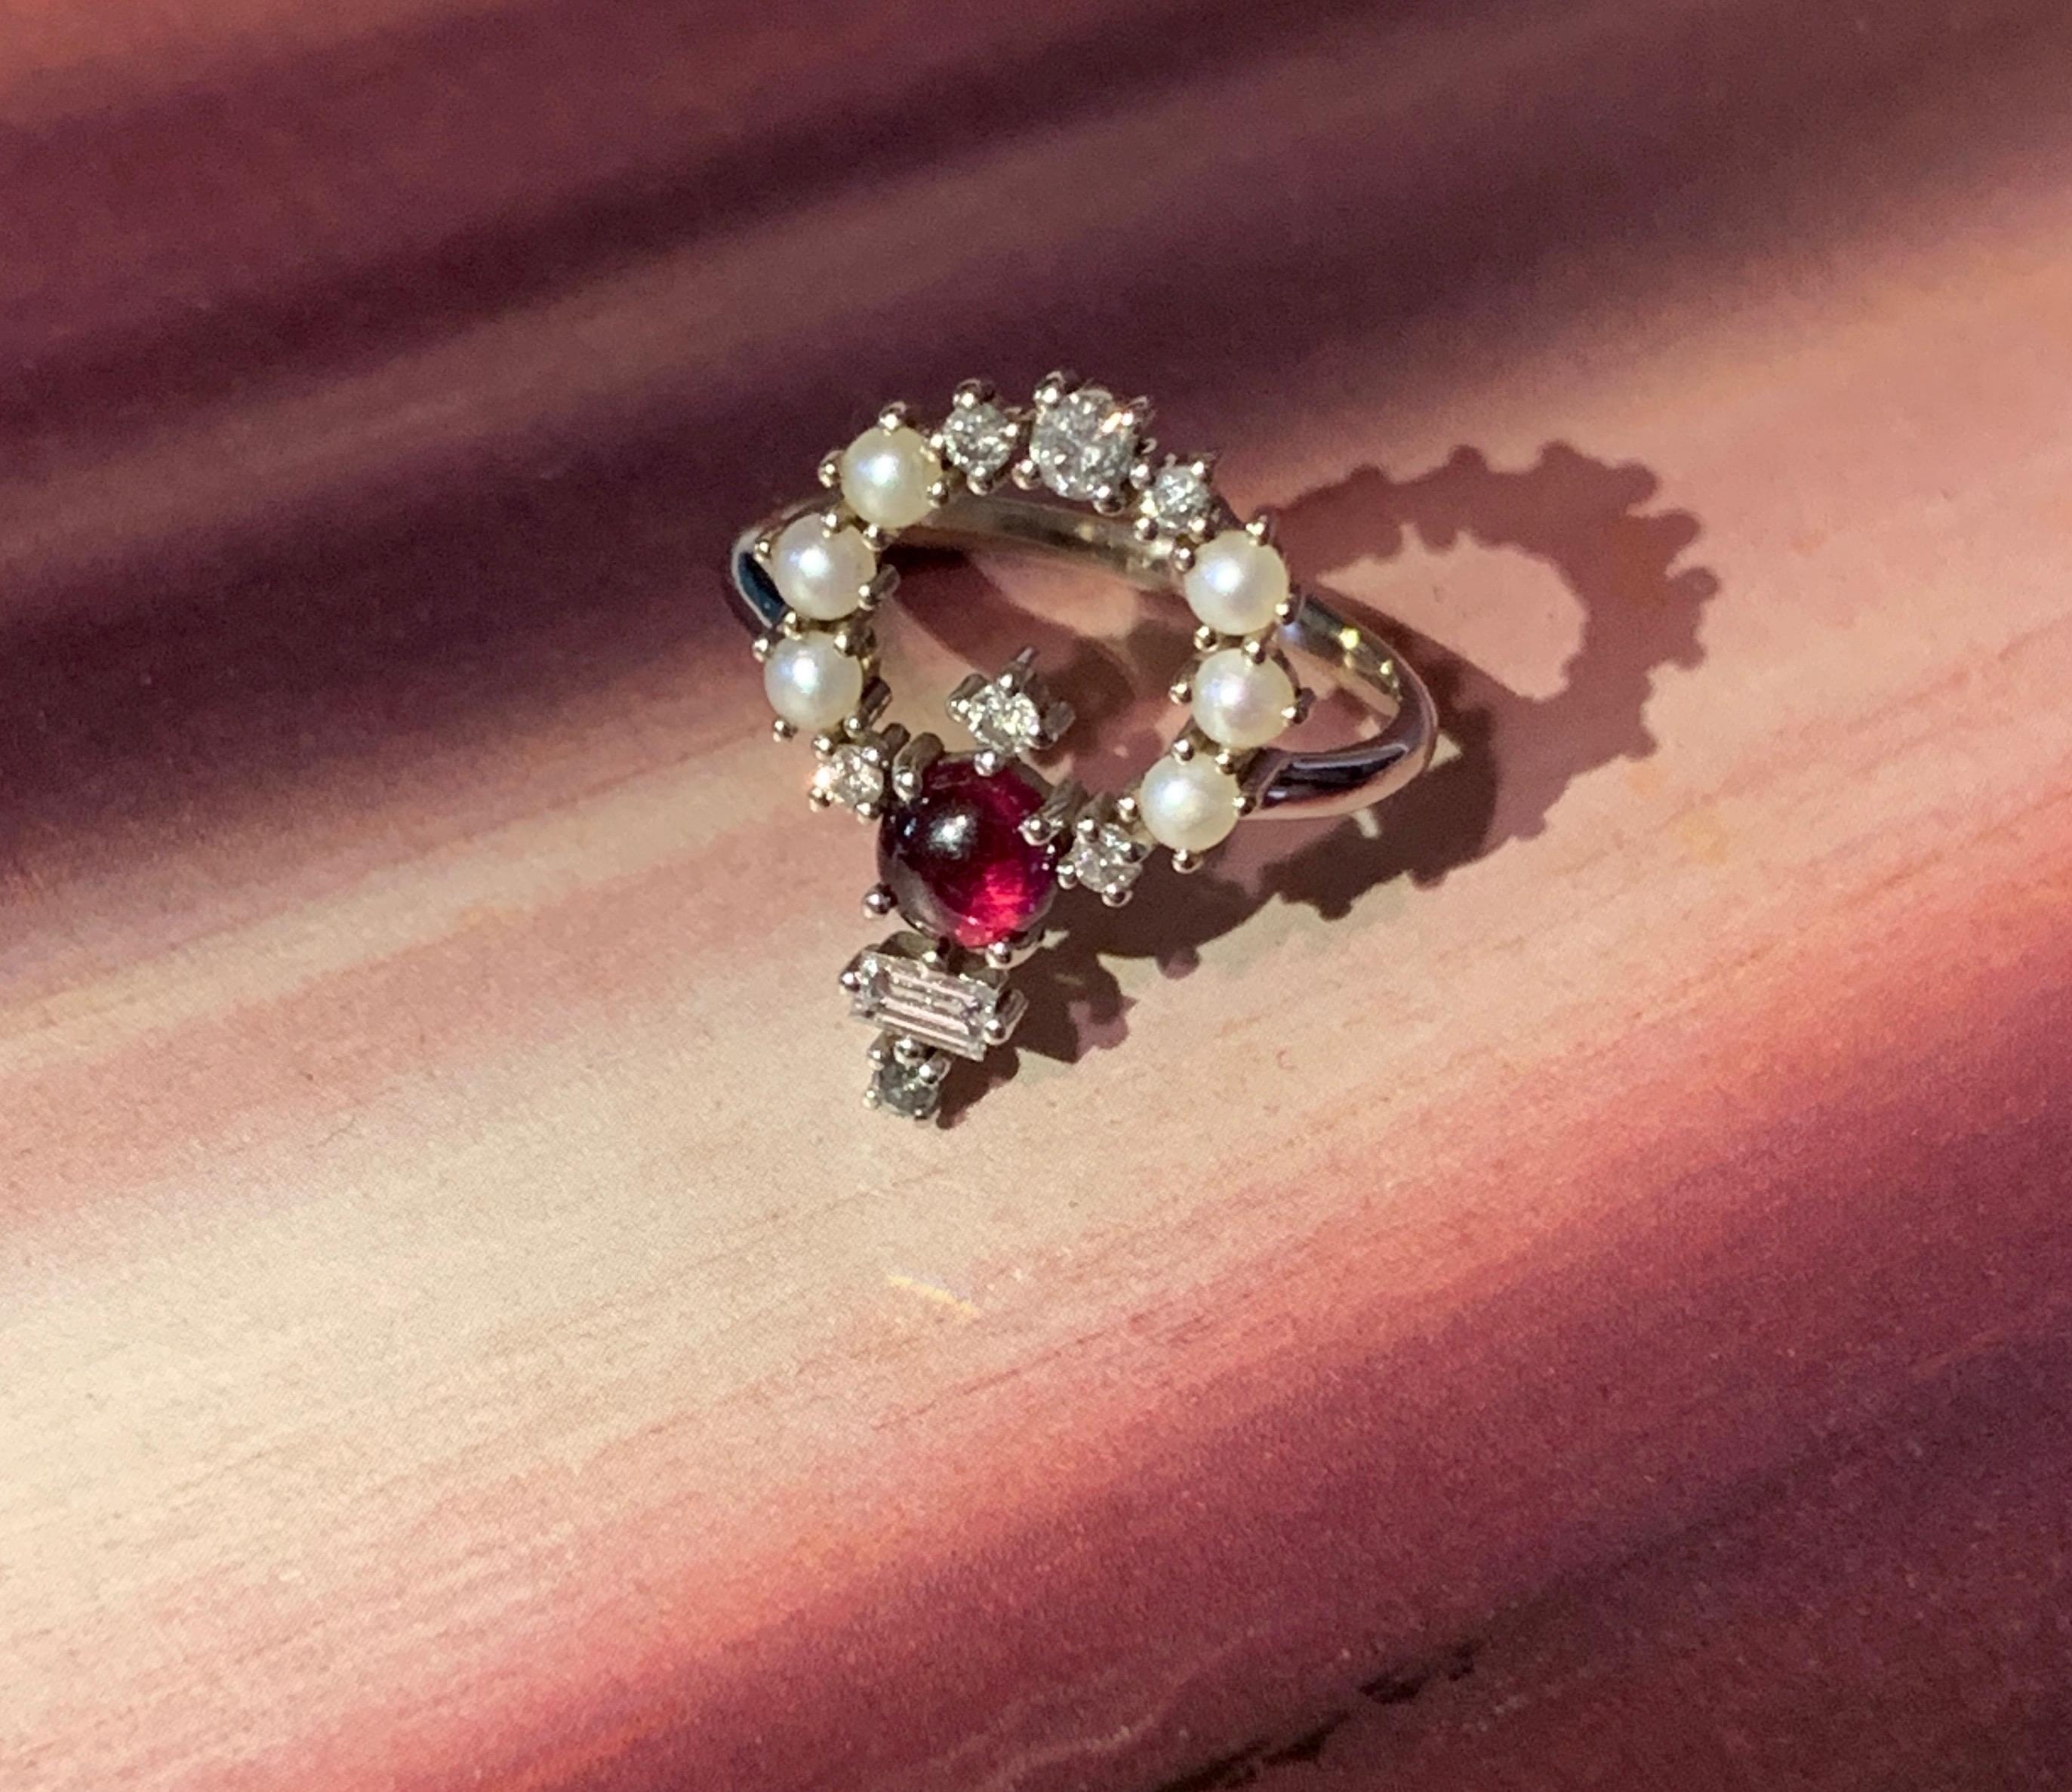 Women's Colorful 18 Karat Gold Ring with Diamonds, Garnets, Pearls